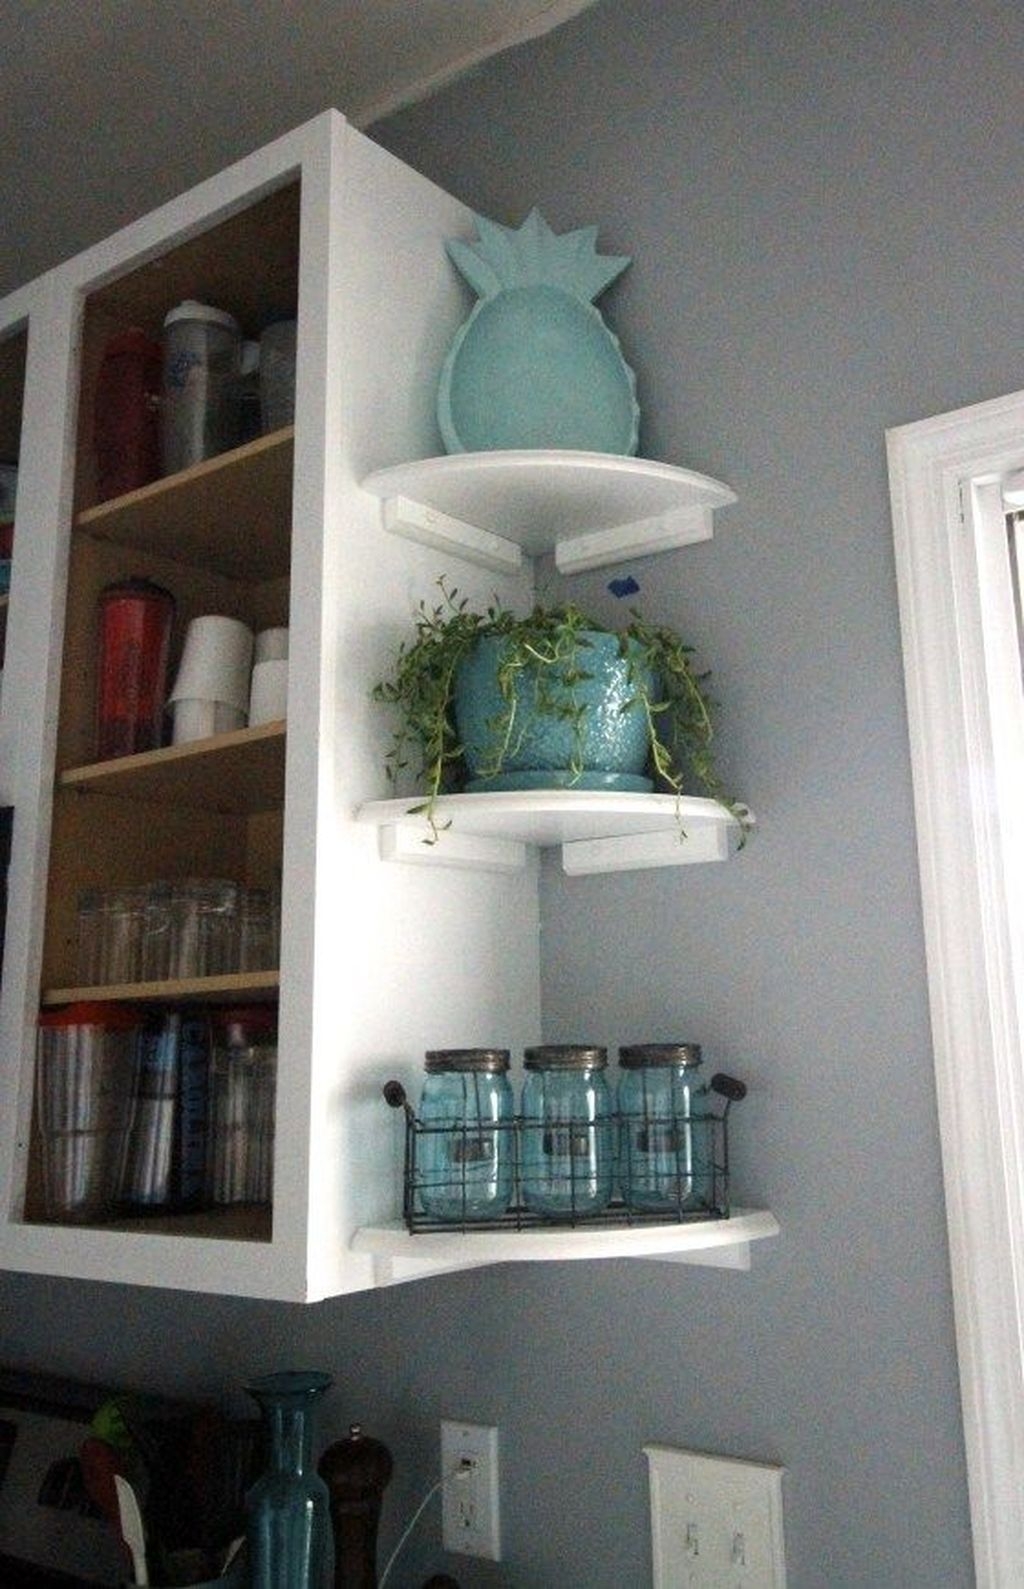 Creative Floating Corner Shelves For Living Room Organization Ideas 38